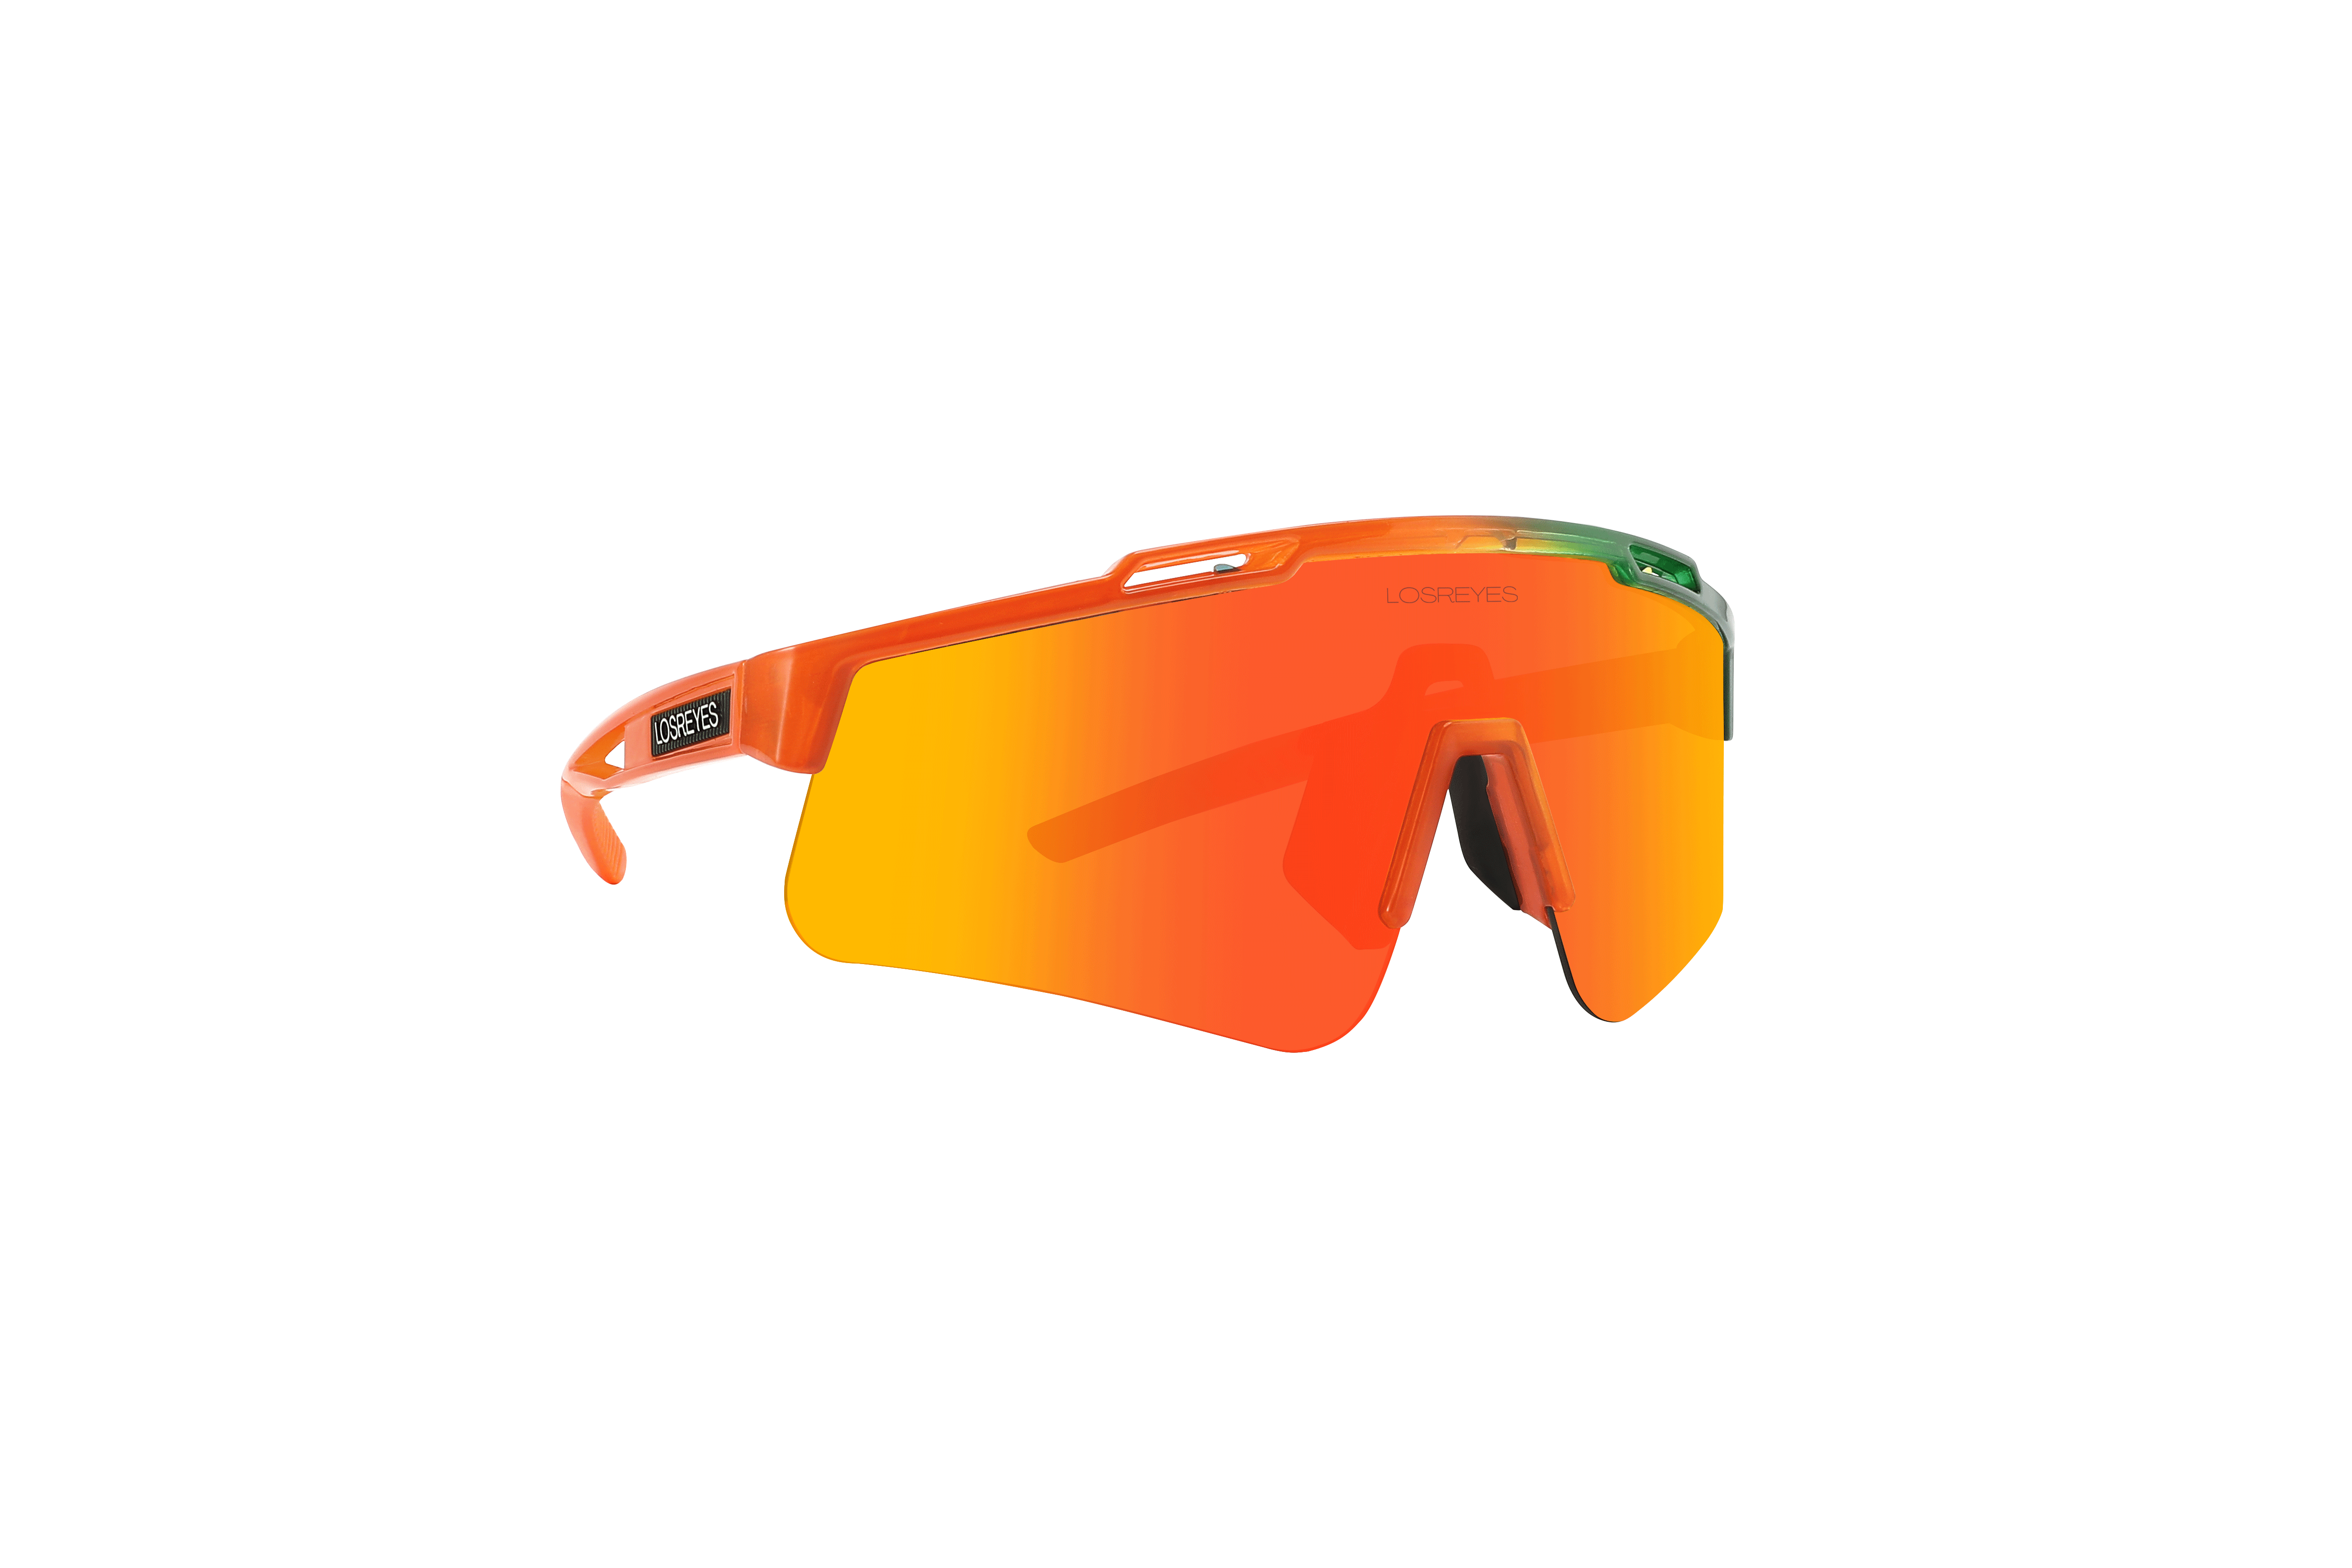 Los Reyes Miami Prime "Green/Orange" Sunglasses